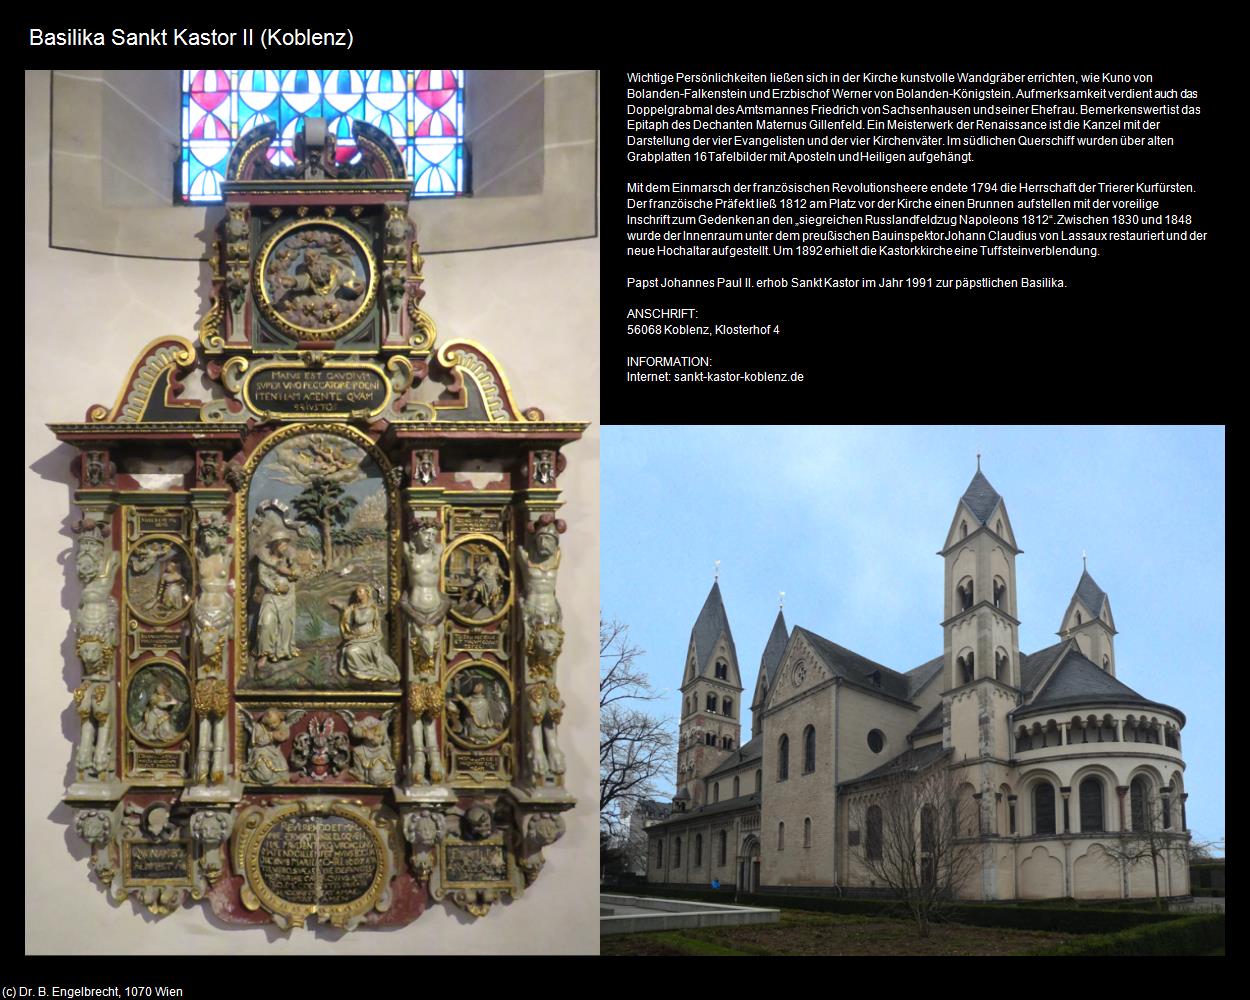 Basilika Sankt Kastor II (Koblenz (DEU-RP)) in RHEINLAND-PFALZ und SAARLAND